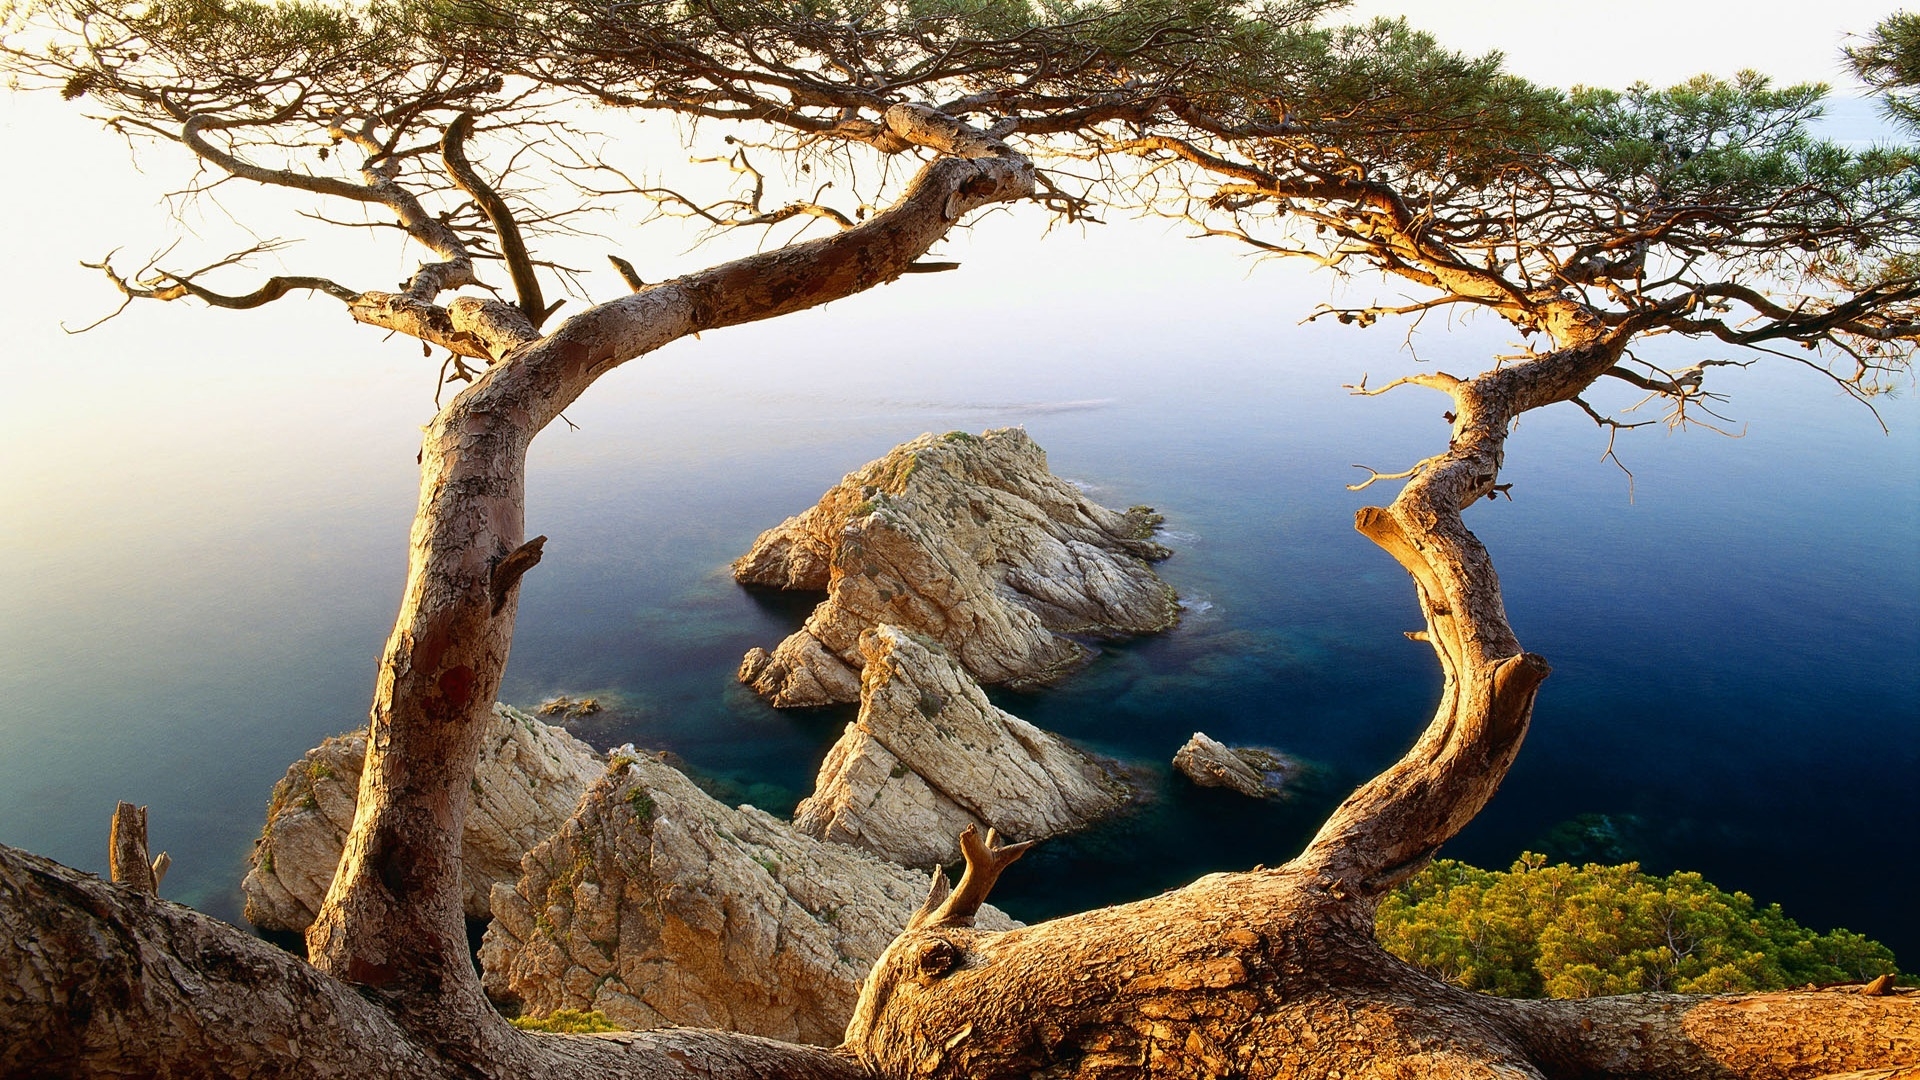 Trees near to cliffs ocean for 1920 x 1080 HDTV 1080p resolution